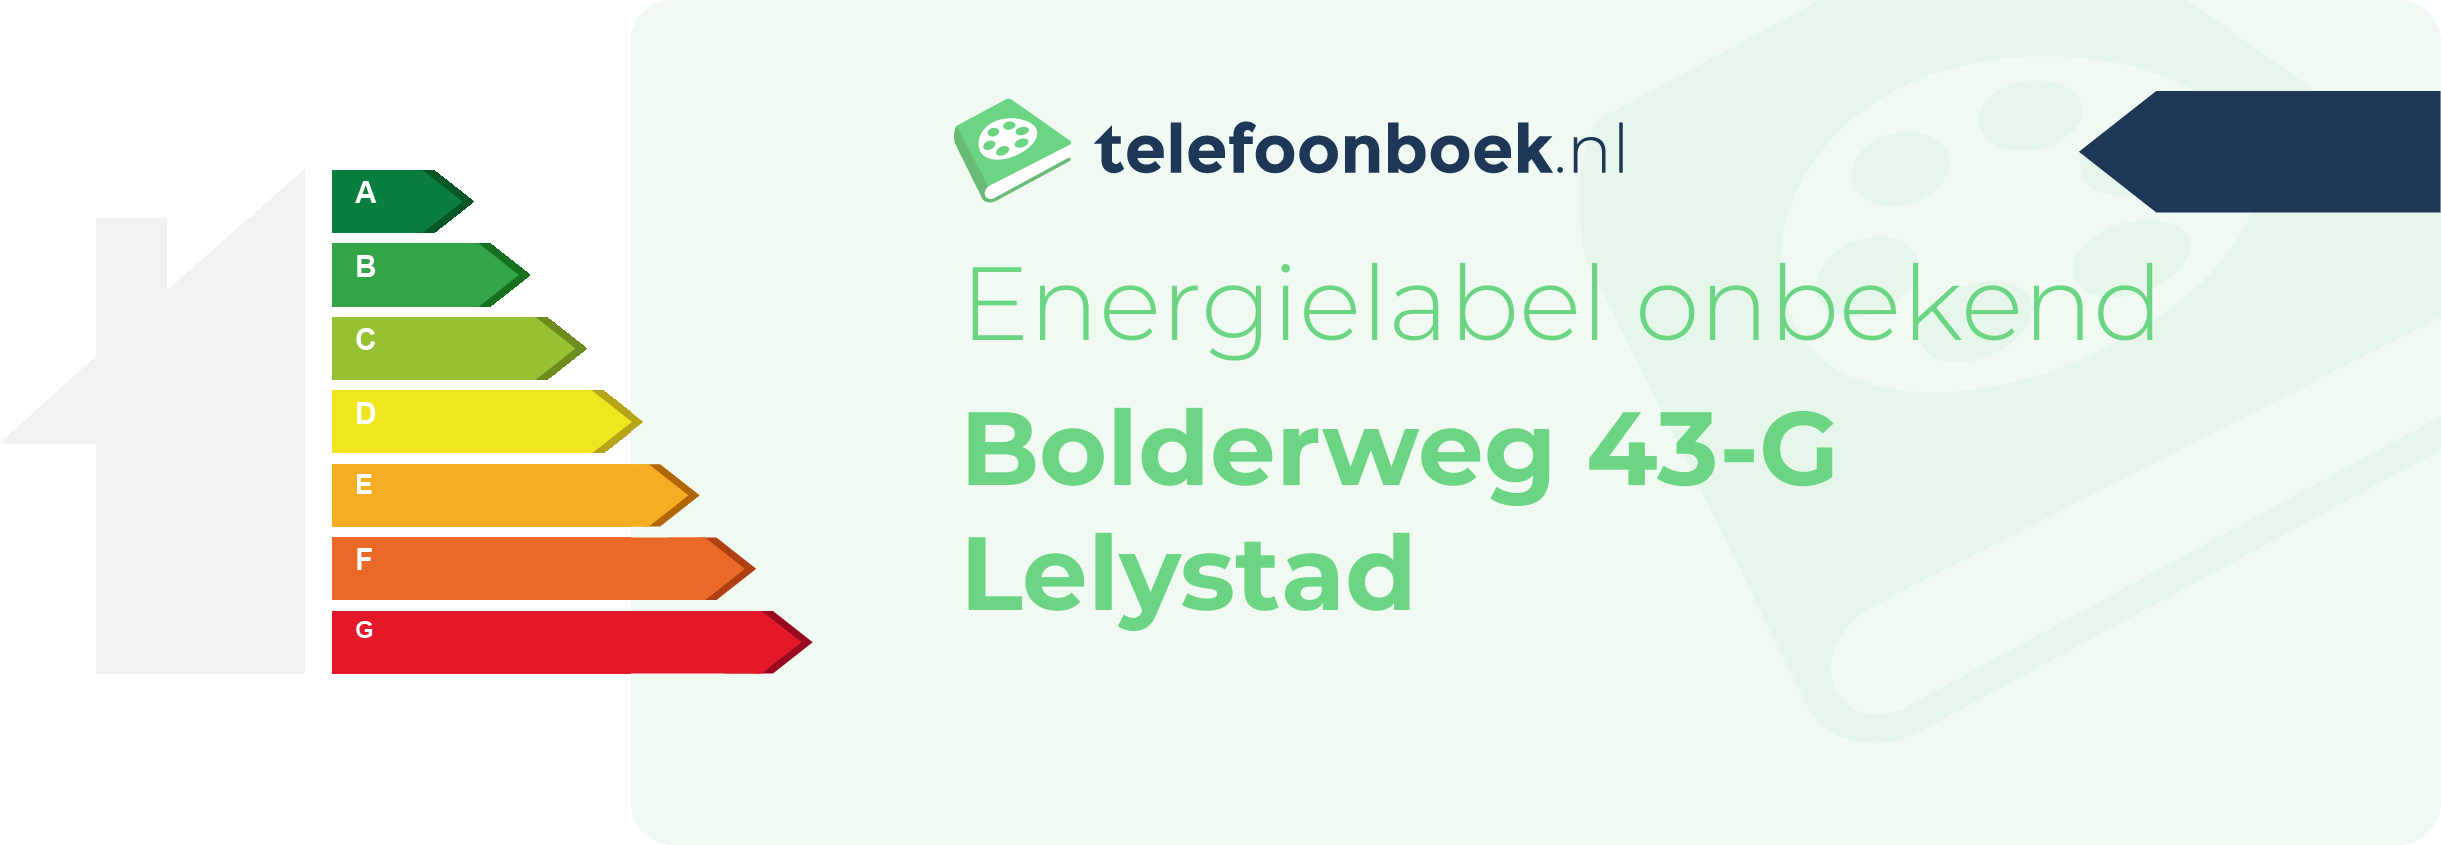 Energielabel Bolderweg 43-G Lelystad